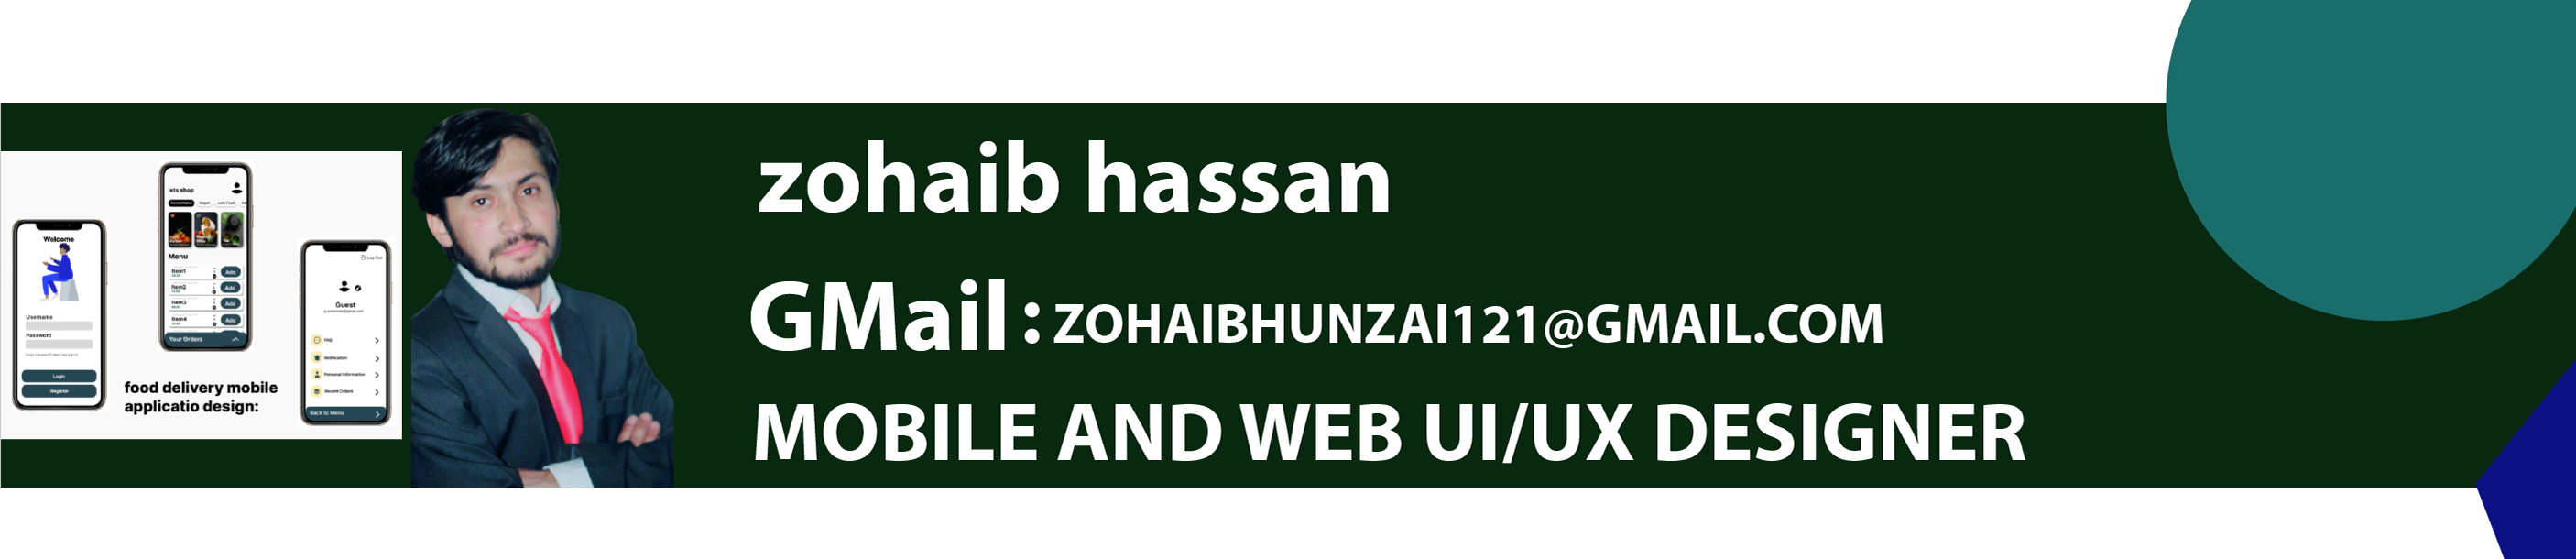 Zohaib Hassan's profile banner